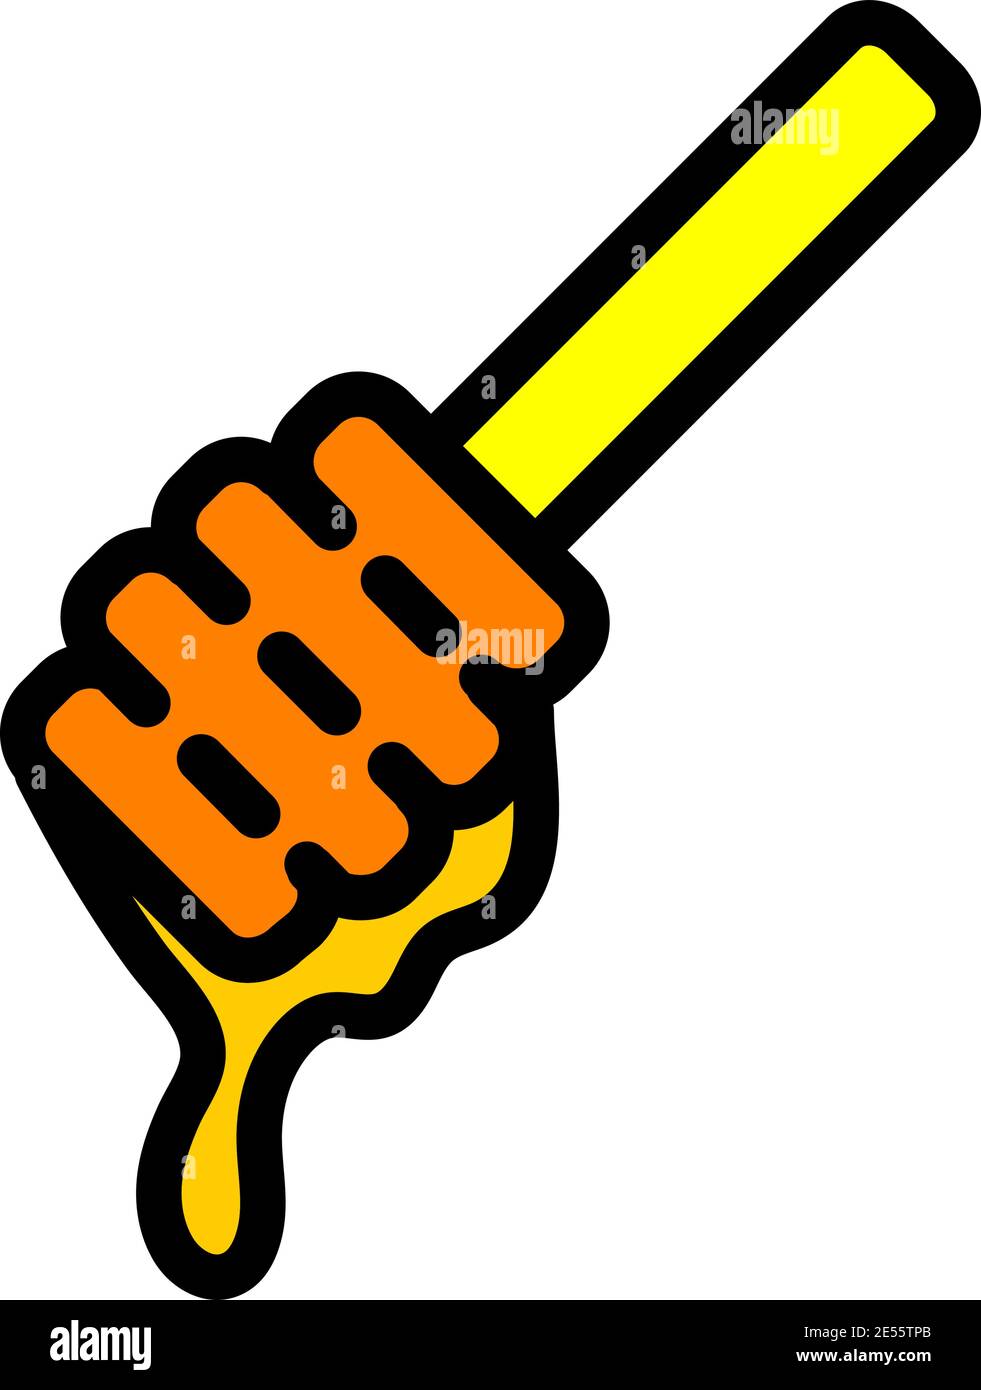 honey simple dripper icon logo Stock Vector